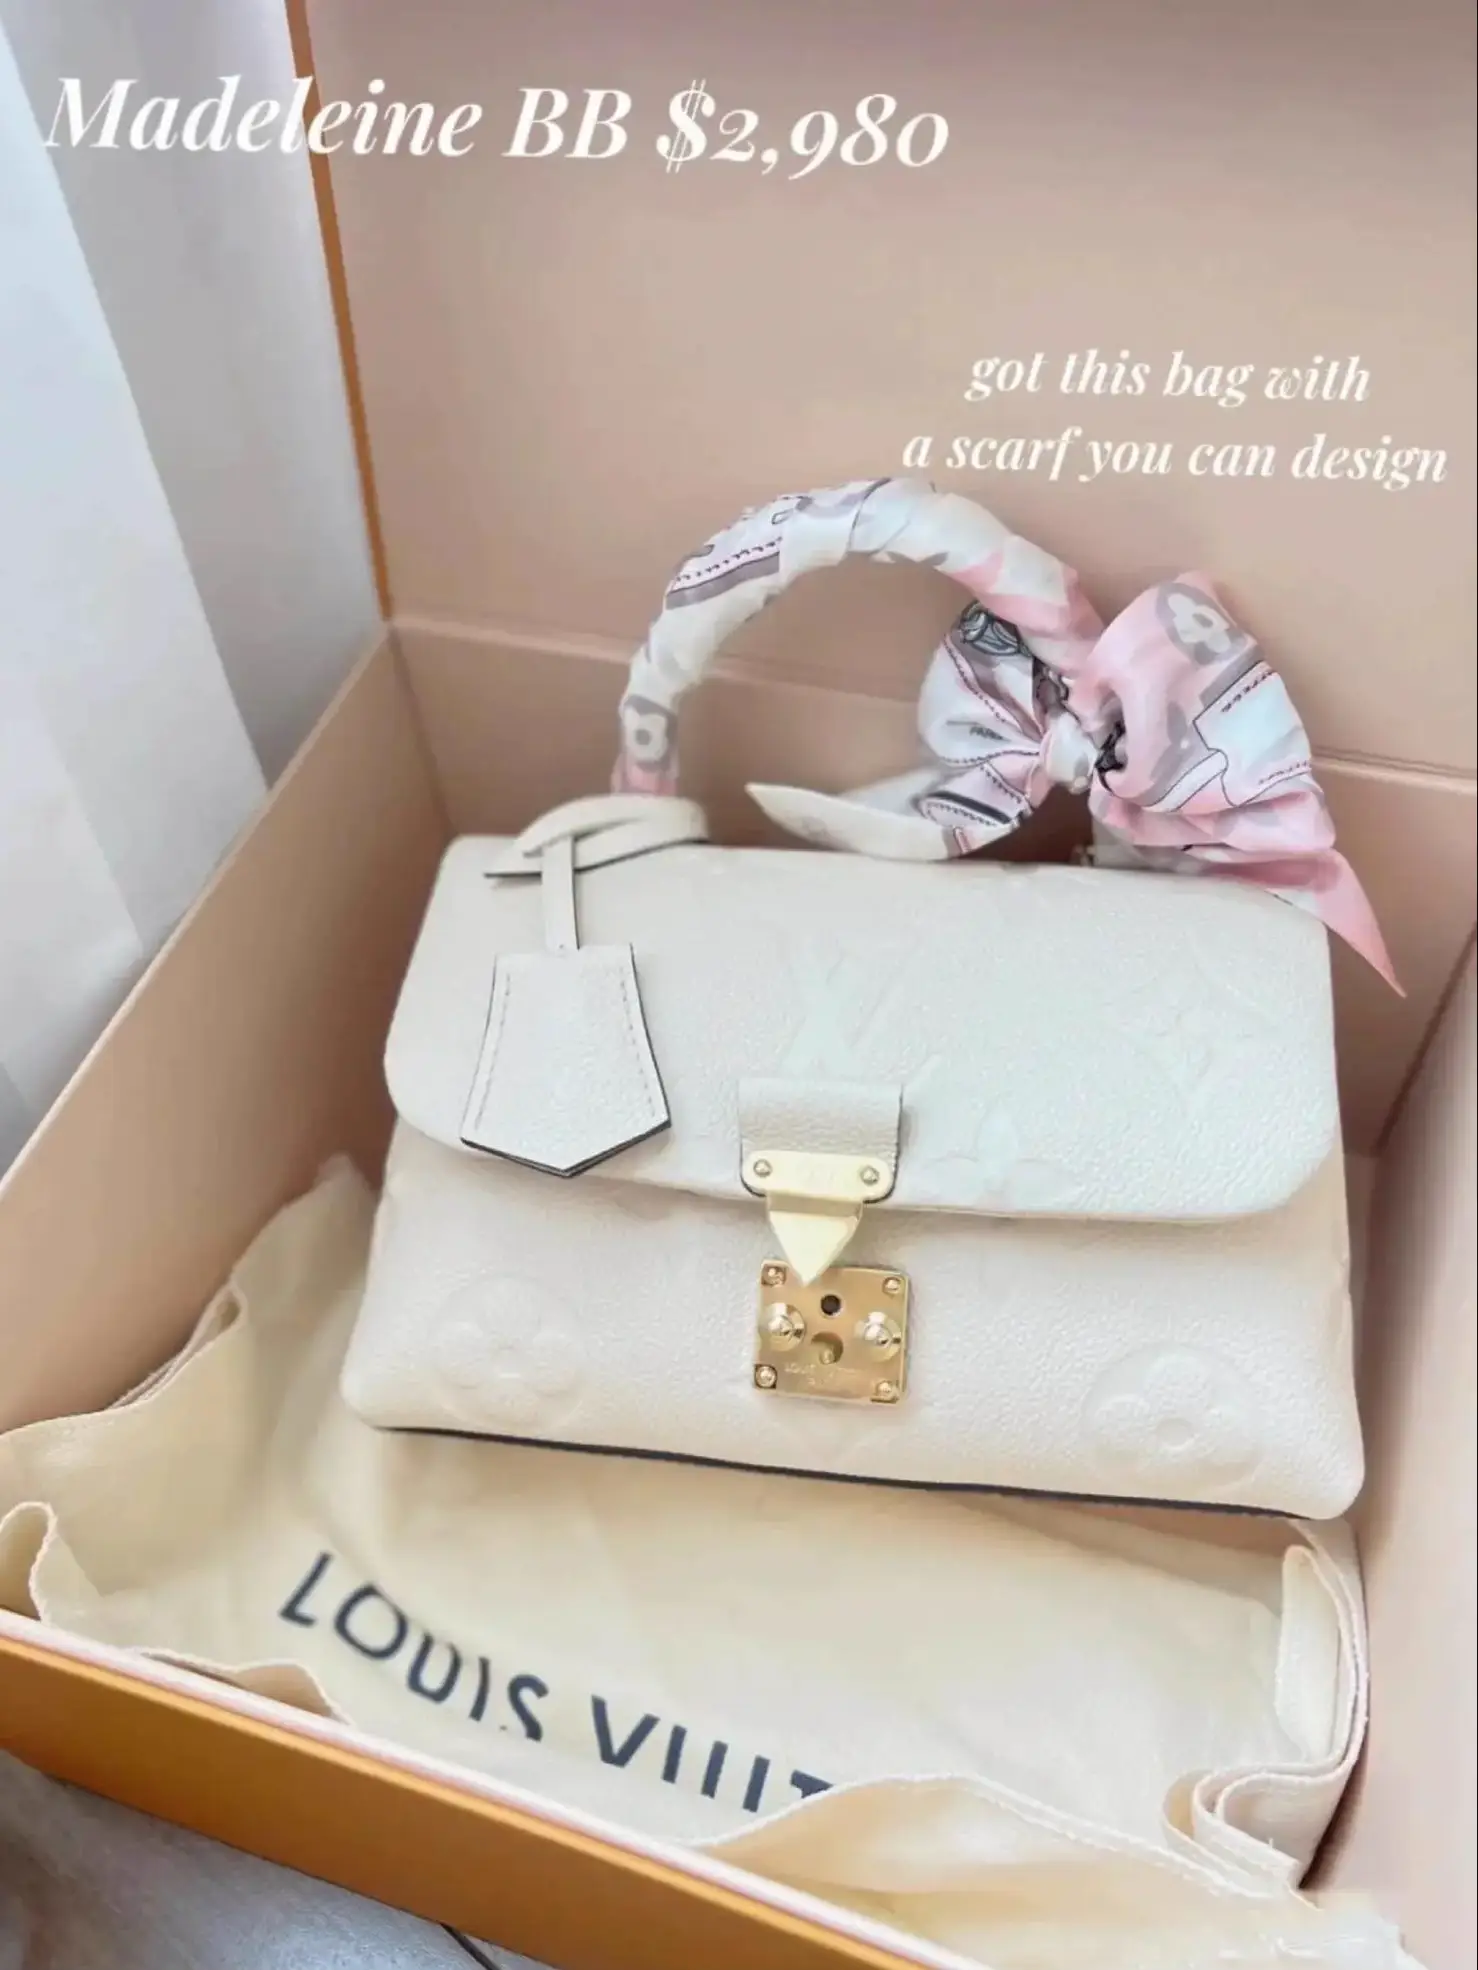 Trendy Louis Vuitton HandBag Review